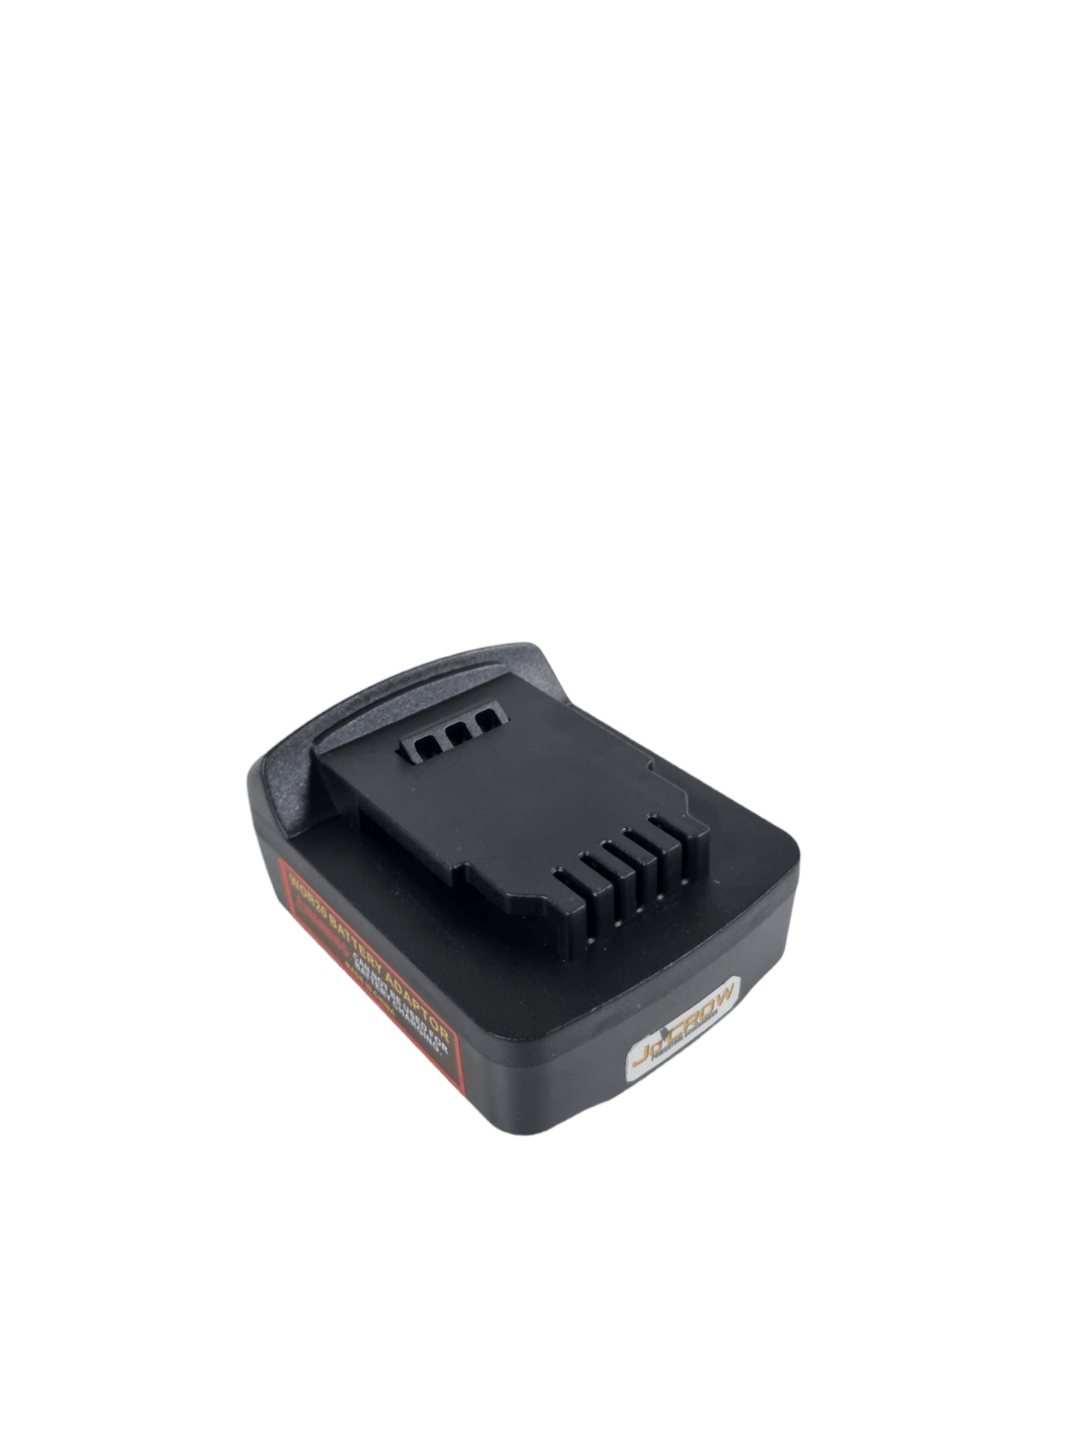 Adapter for WORX 20v Li-ion battery to DeWalt 18v Tools. - JoCROW PTY LTD